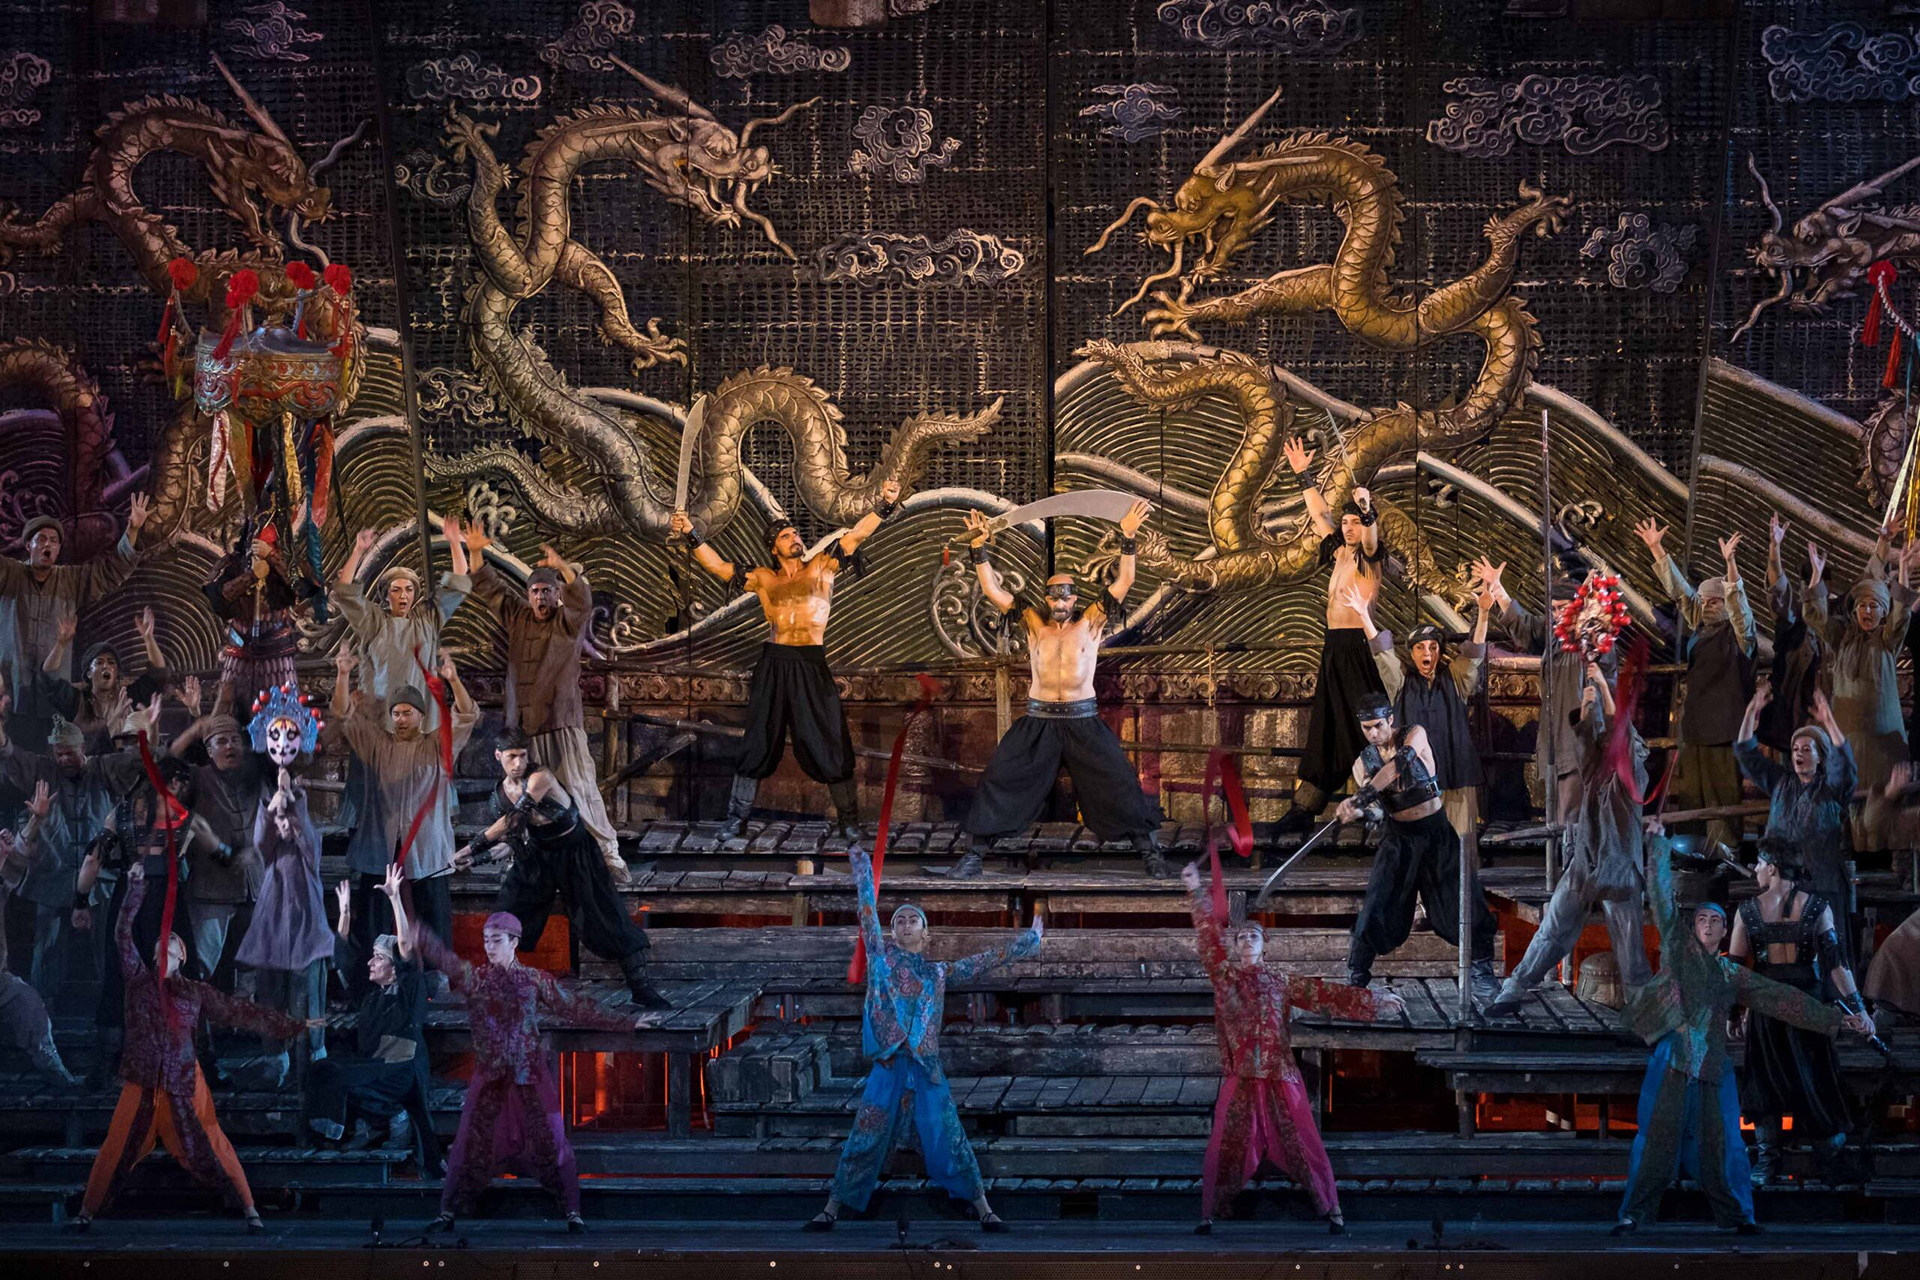 Puccini’s “Turandot” starring Anna Netrebko at Cinema City Poland in March